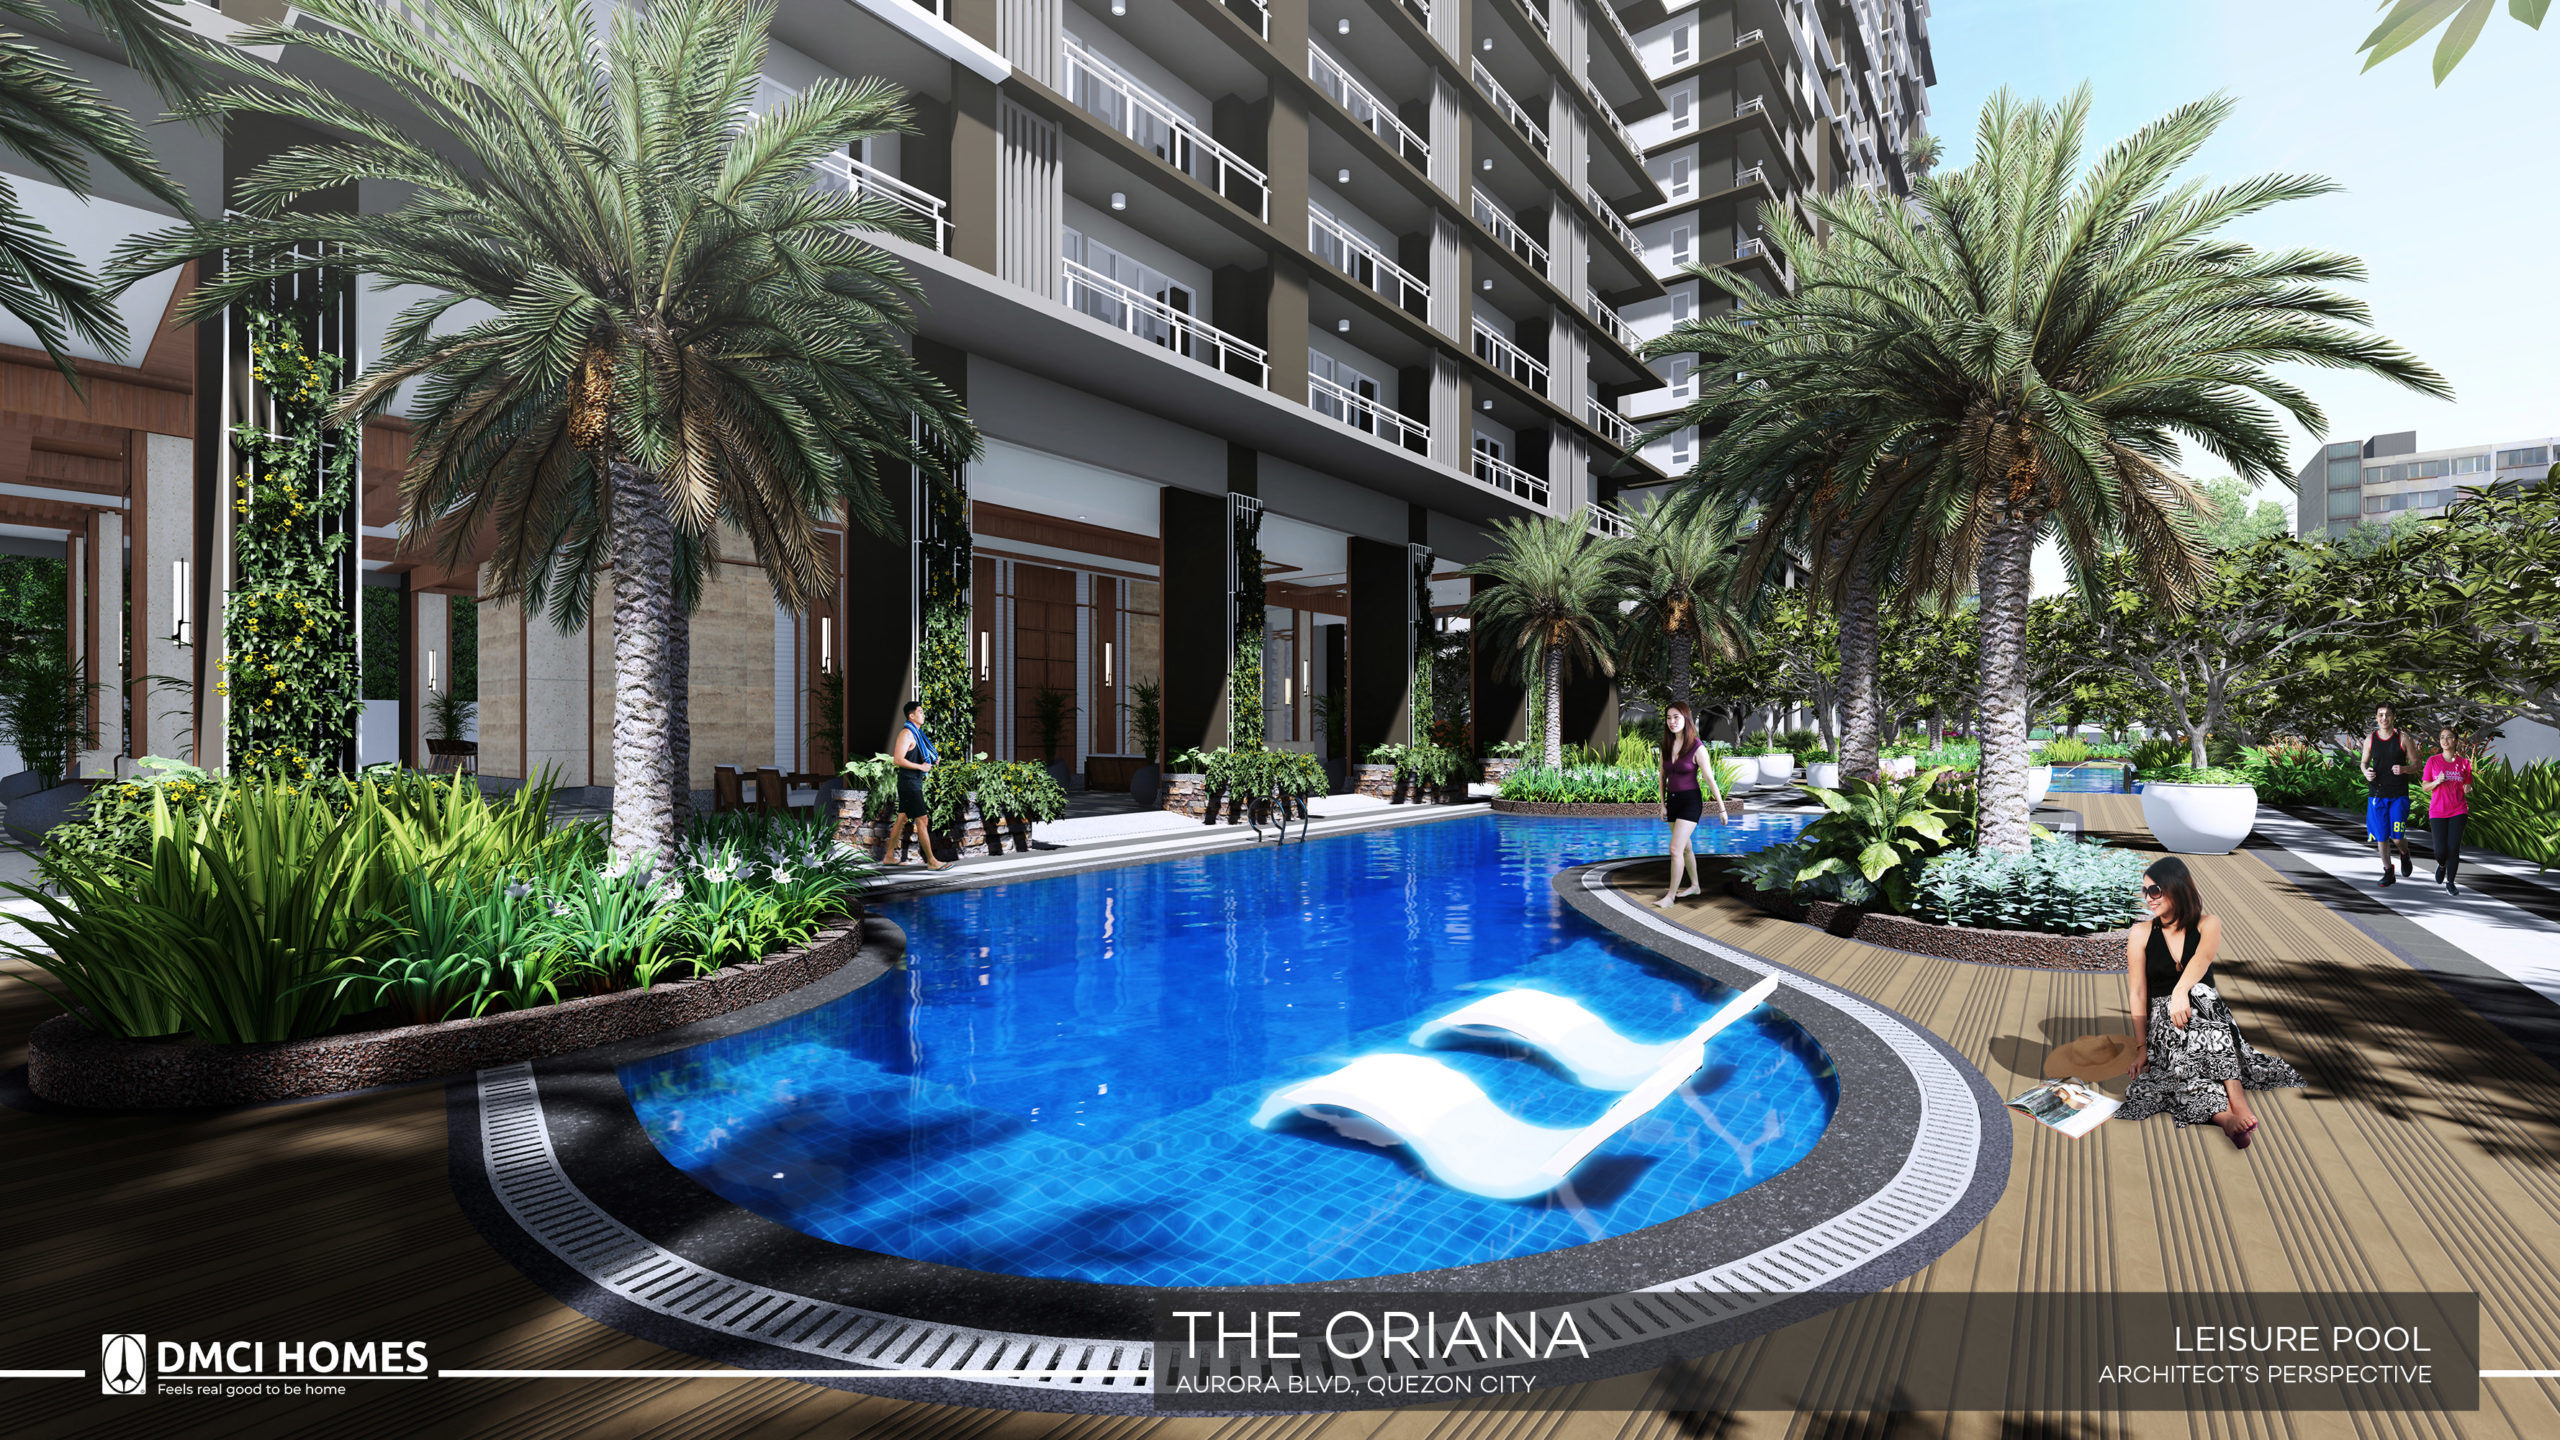 The Oriana DMCI Leisure Pool